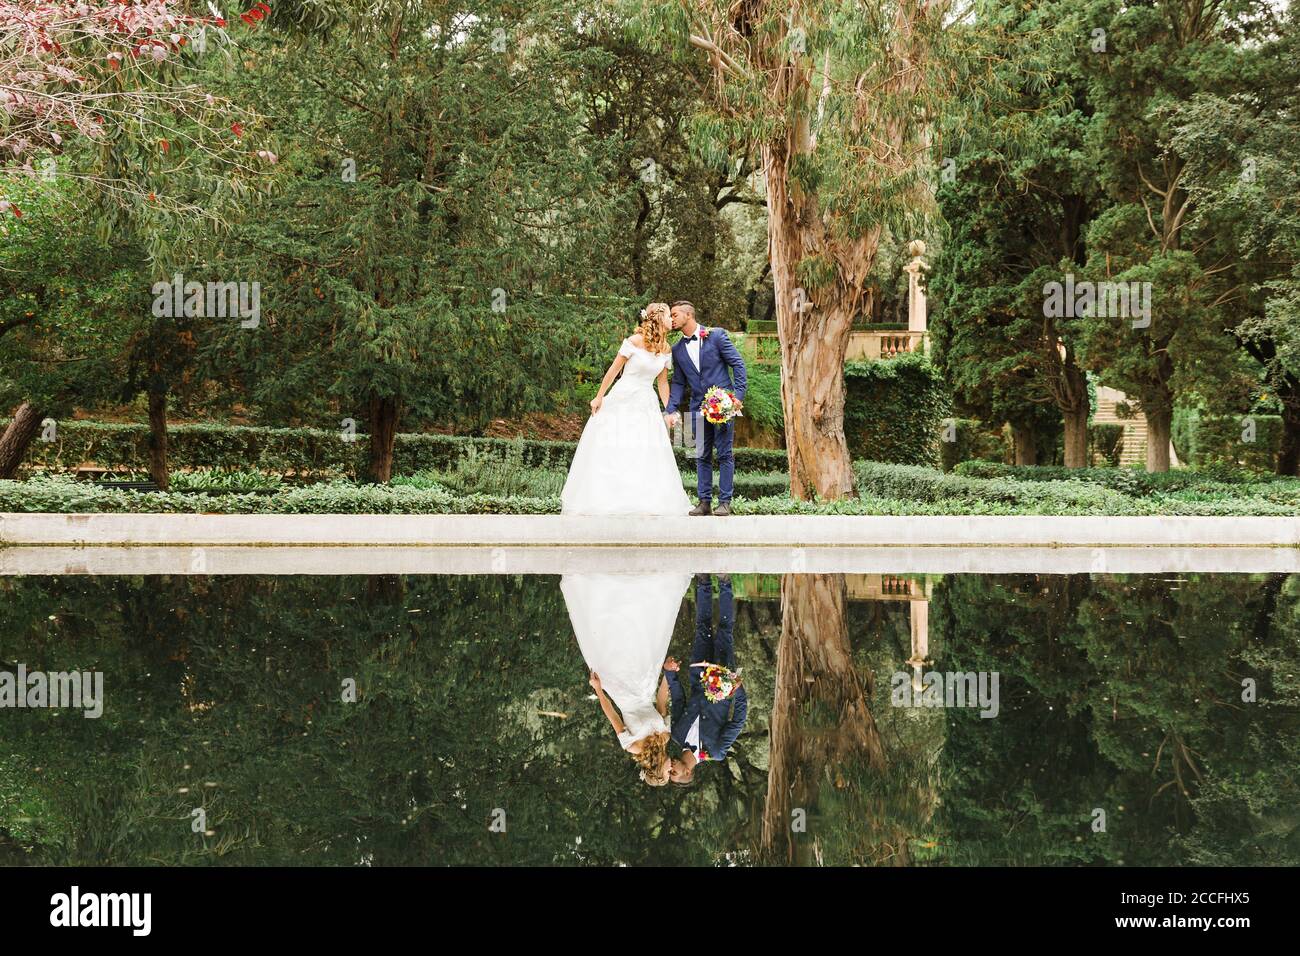 Wedding, newlyweds, young adults, diversity, love, park, reflection Stock Photo